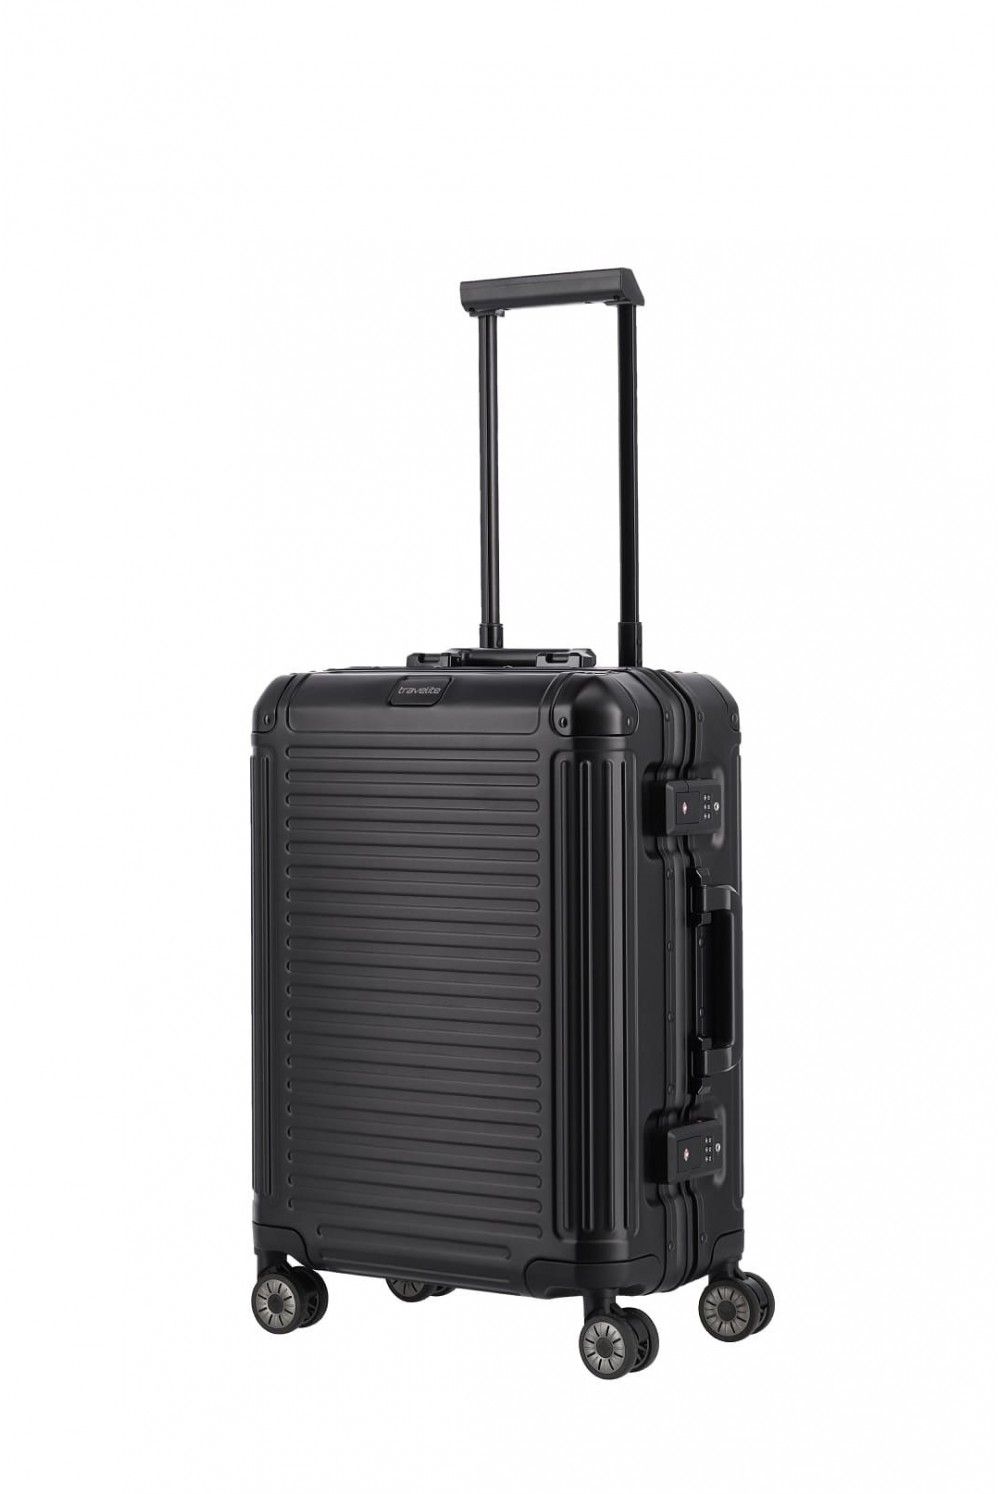 Valise aluminium Travelite NEXT 55 bagage à main, noir